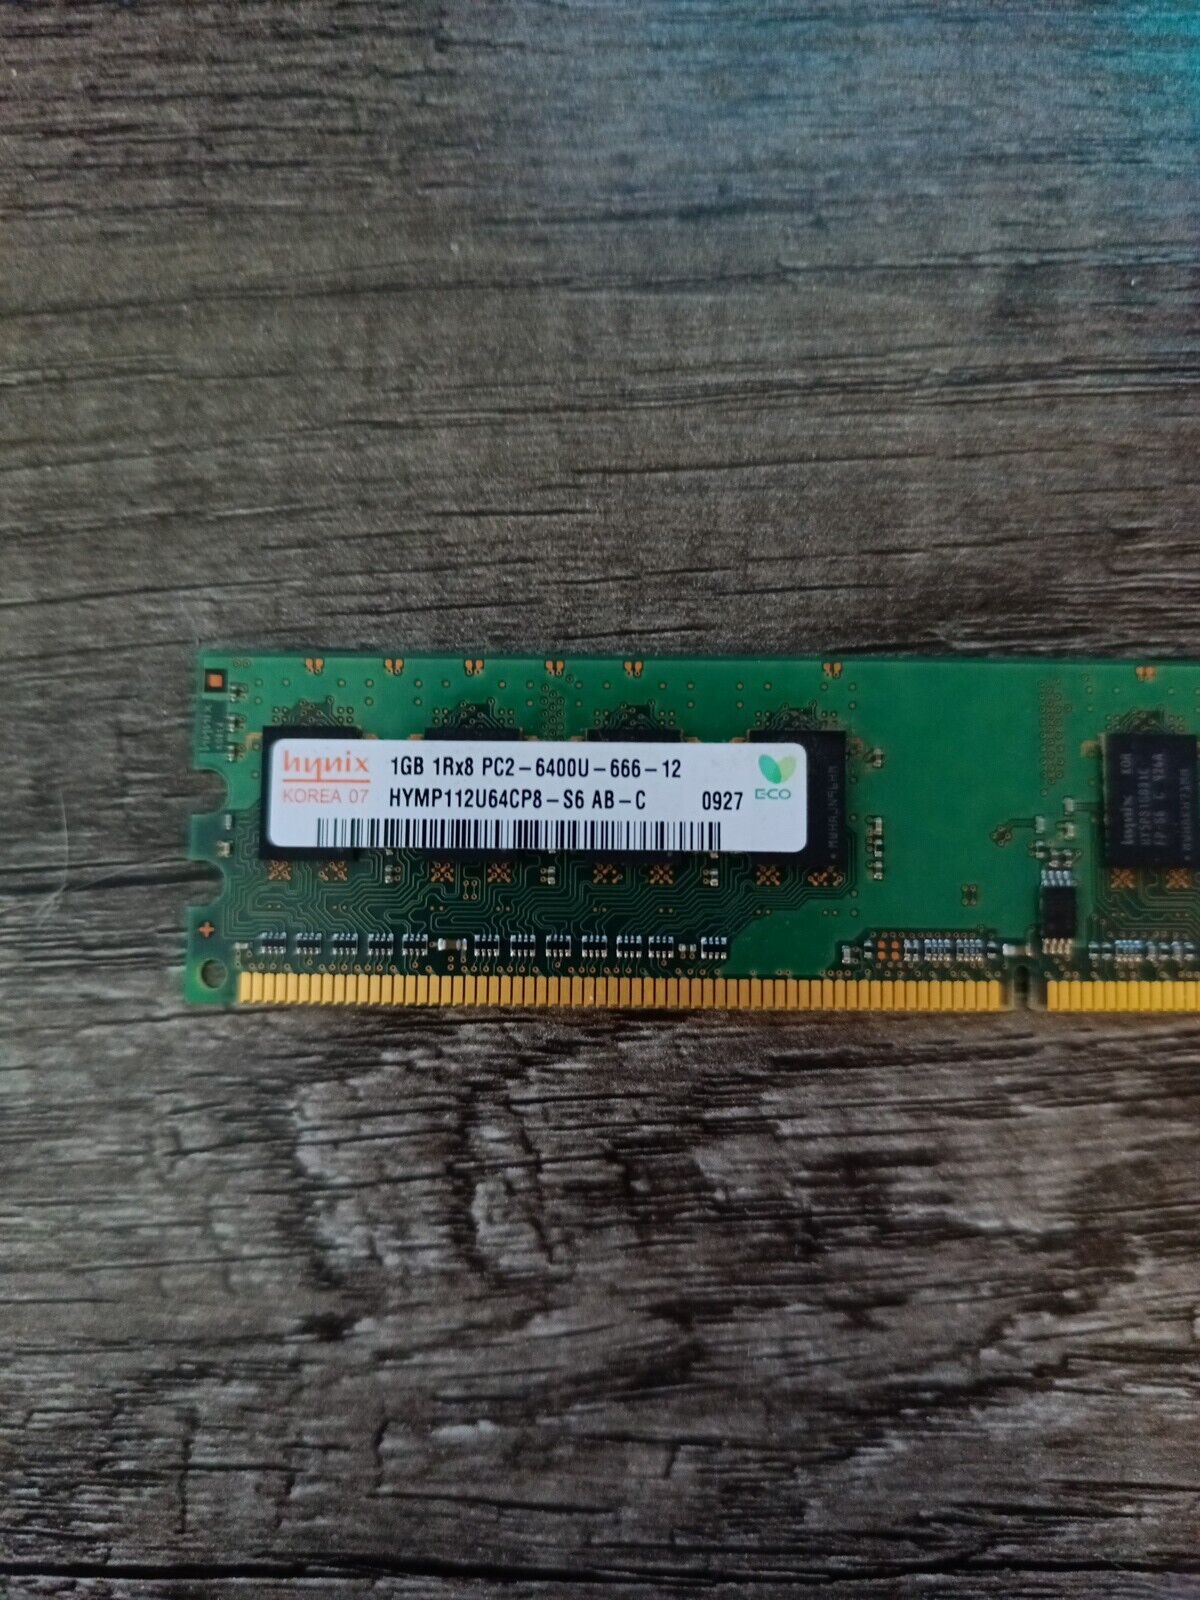 Hynix Memory 1GB 2Rx8 PC2-6400U-666-12